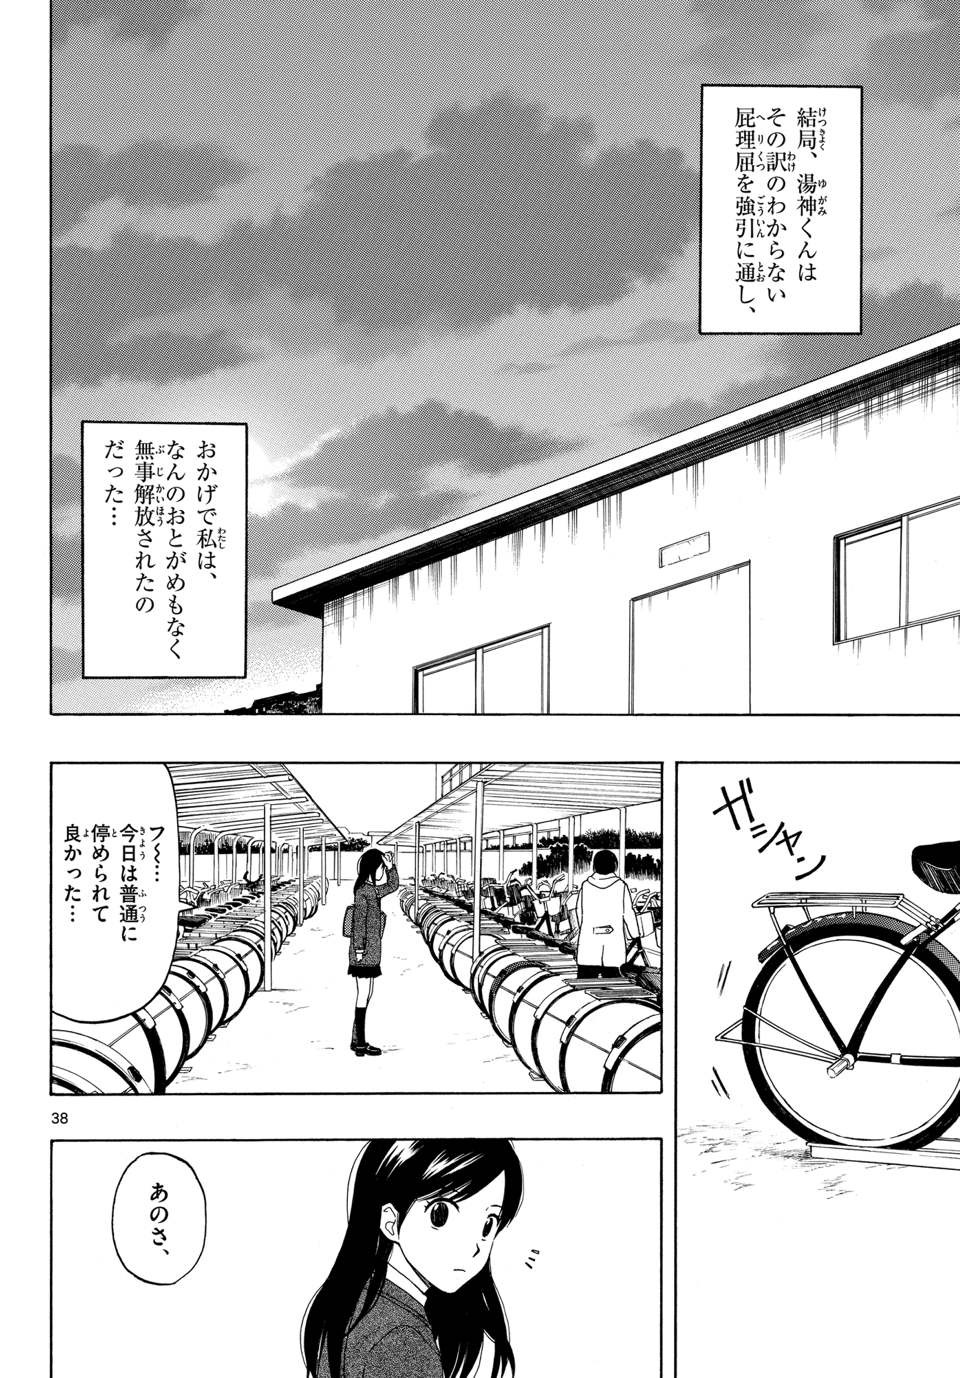 Yugami-kun ni wa Tomodachi ga Inai - Chapter 001 - Page 39